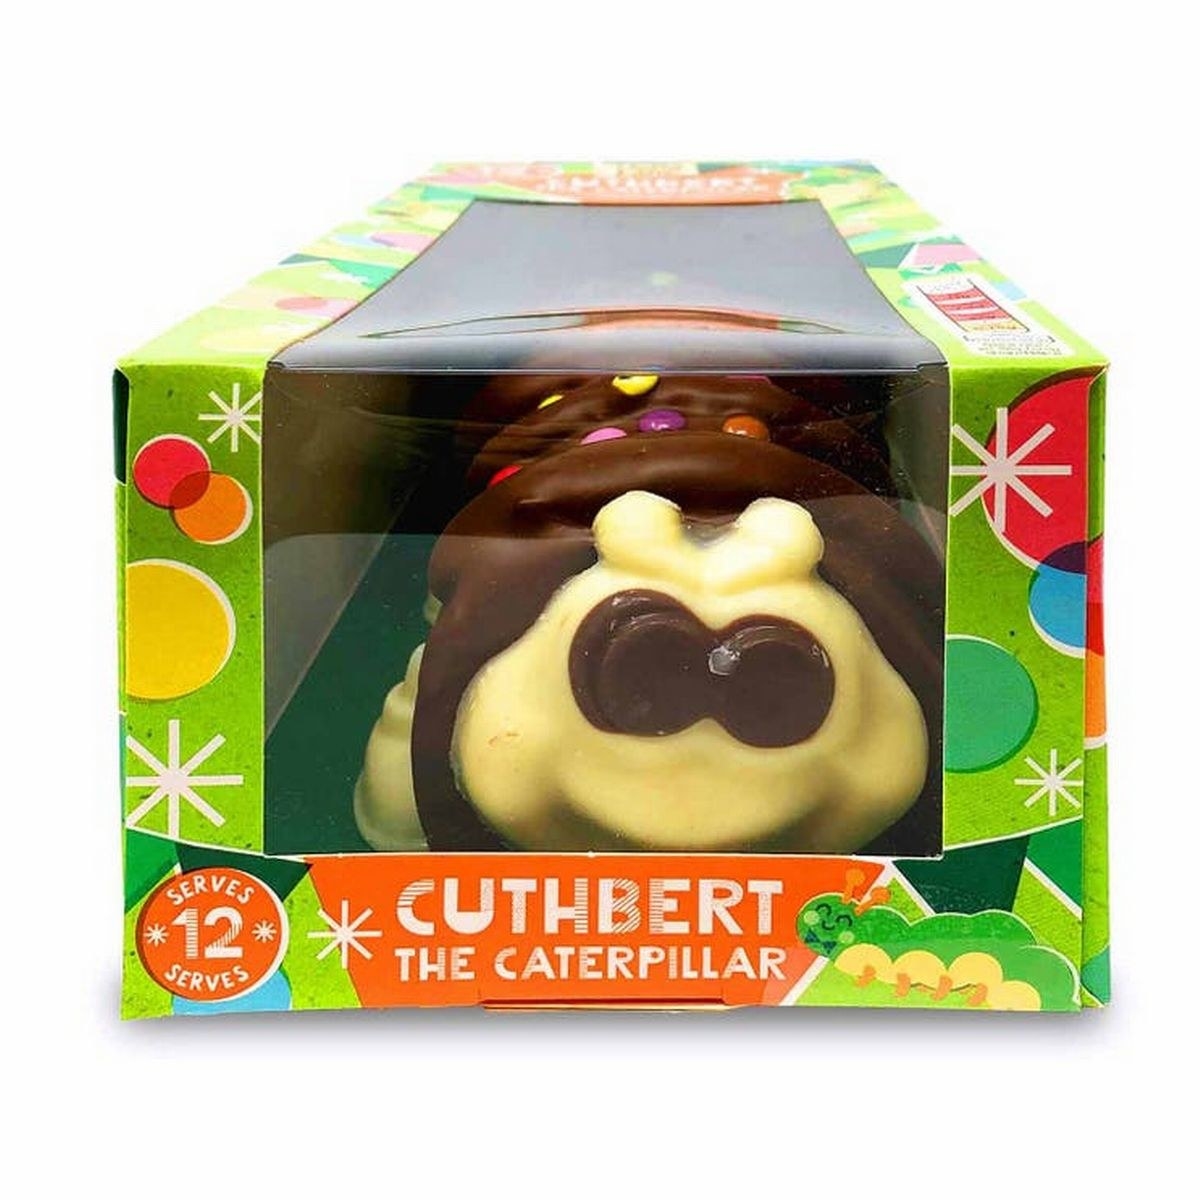 a chocolate caterpillar-shaped cake in a box